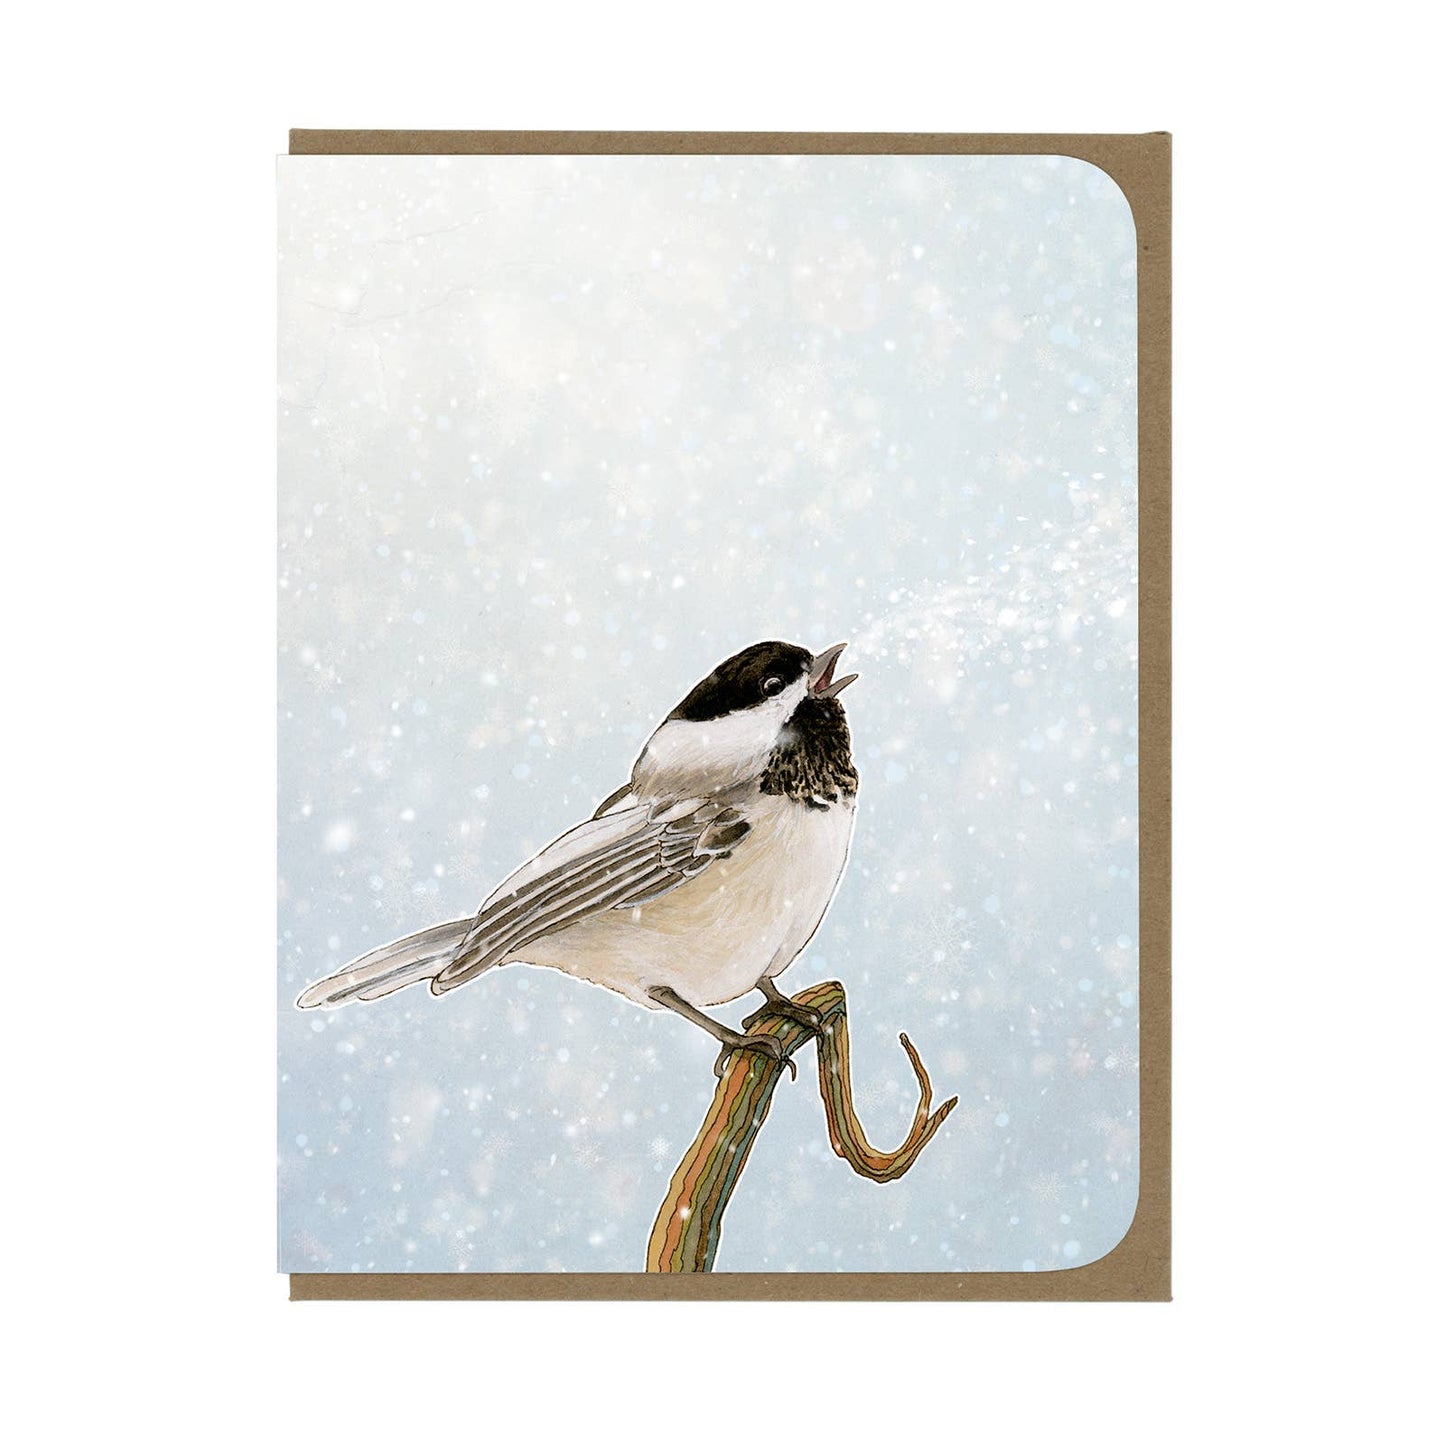 Winter Scene - Chickadee and Snow - Greeting Card